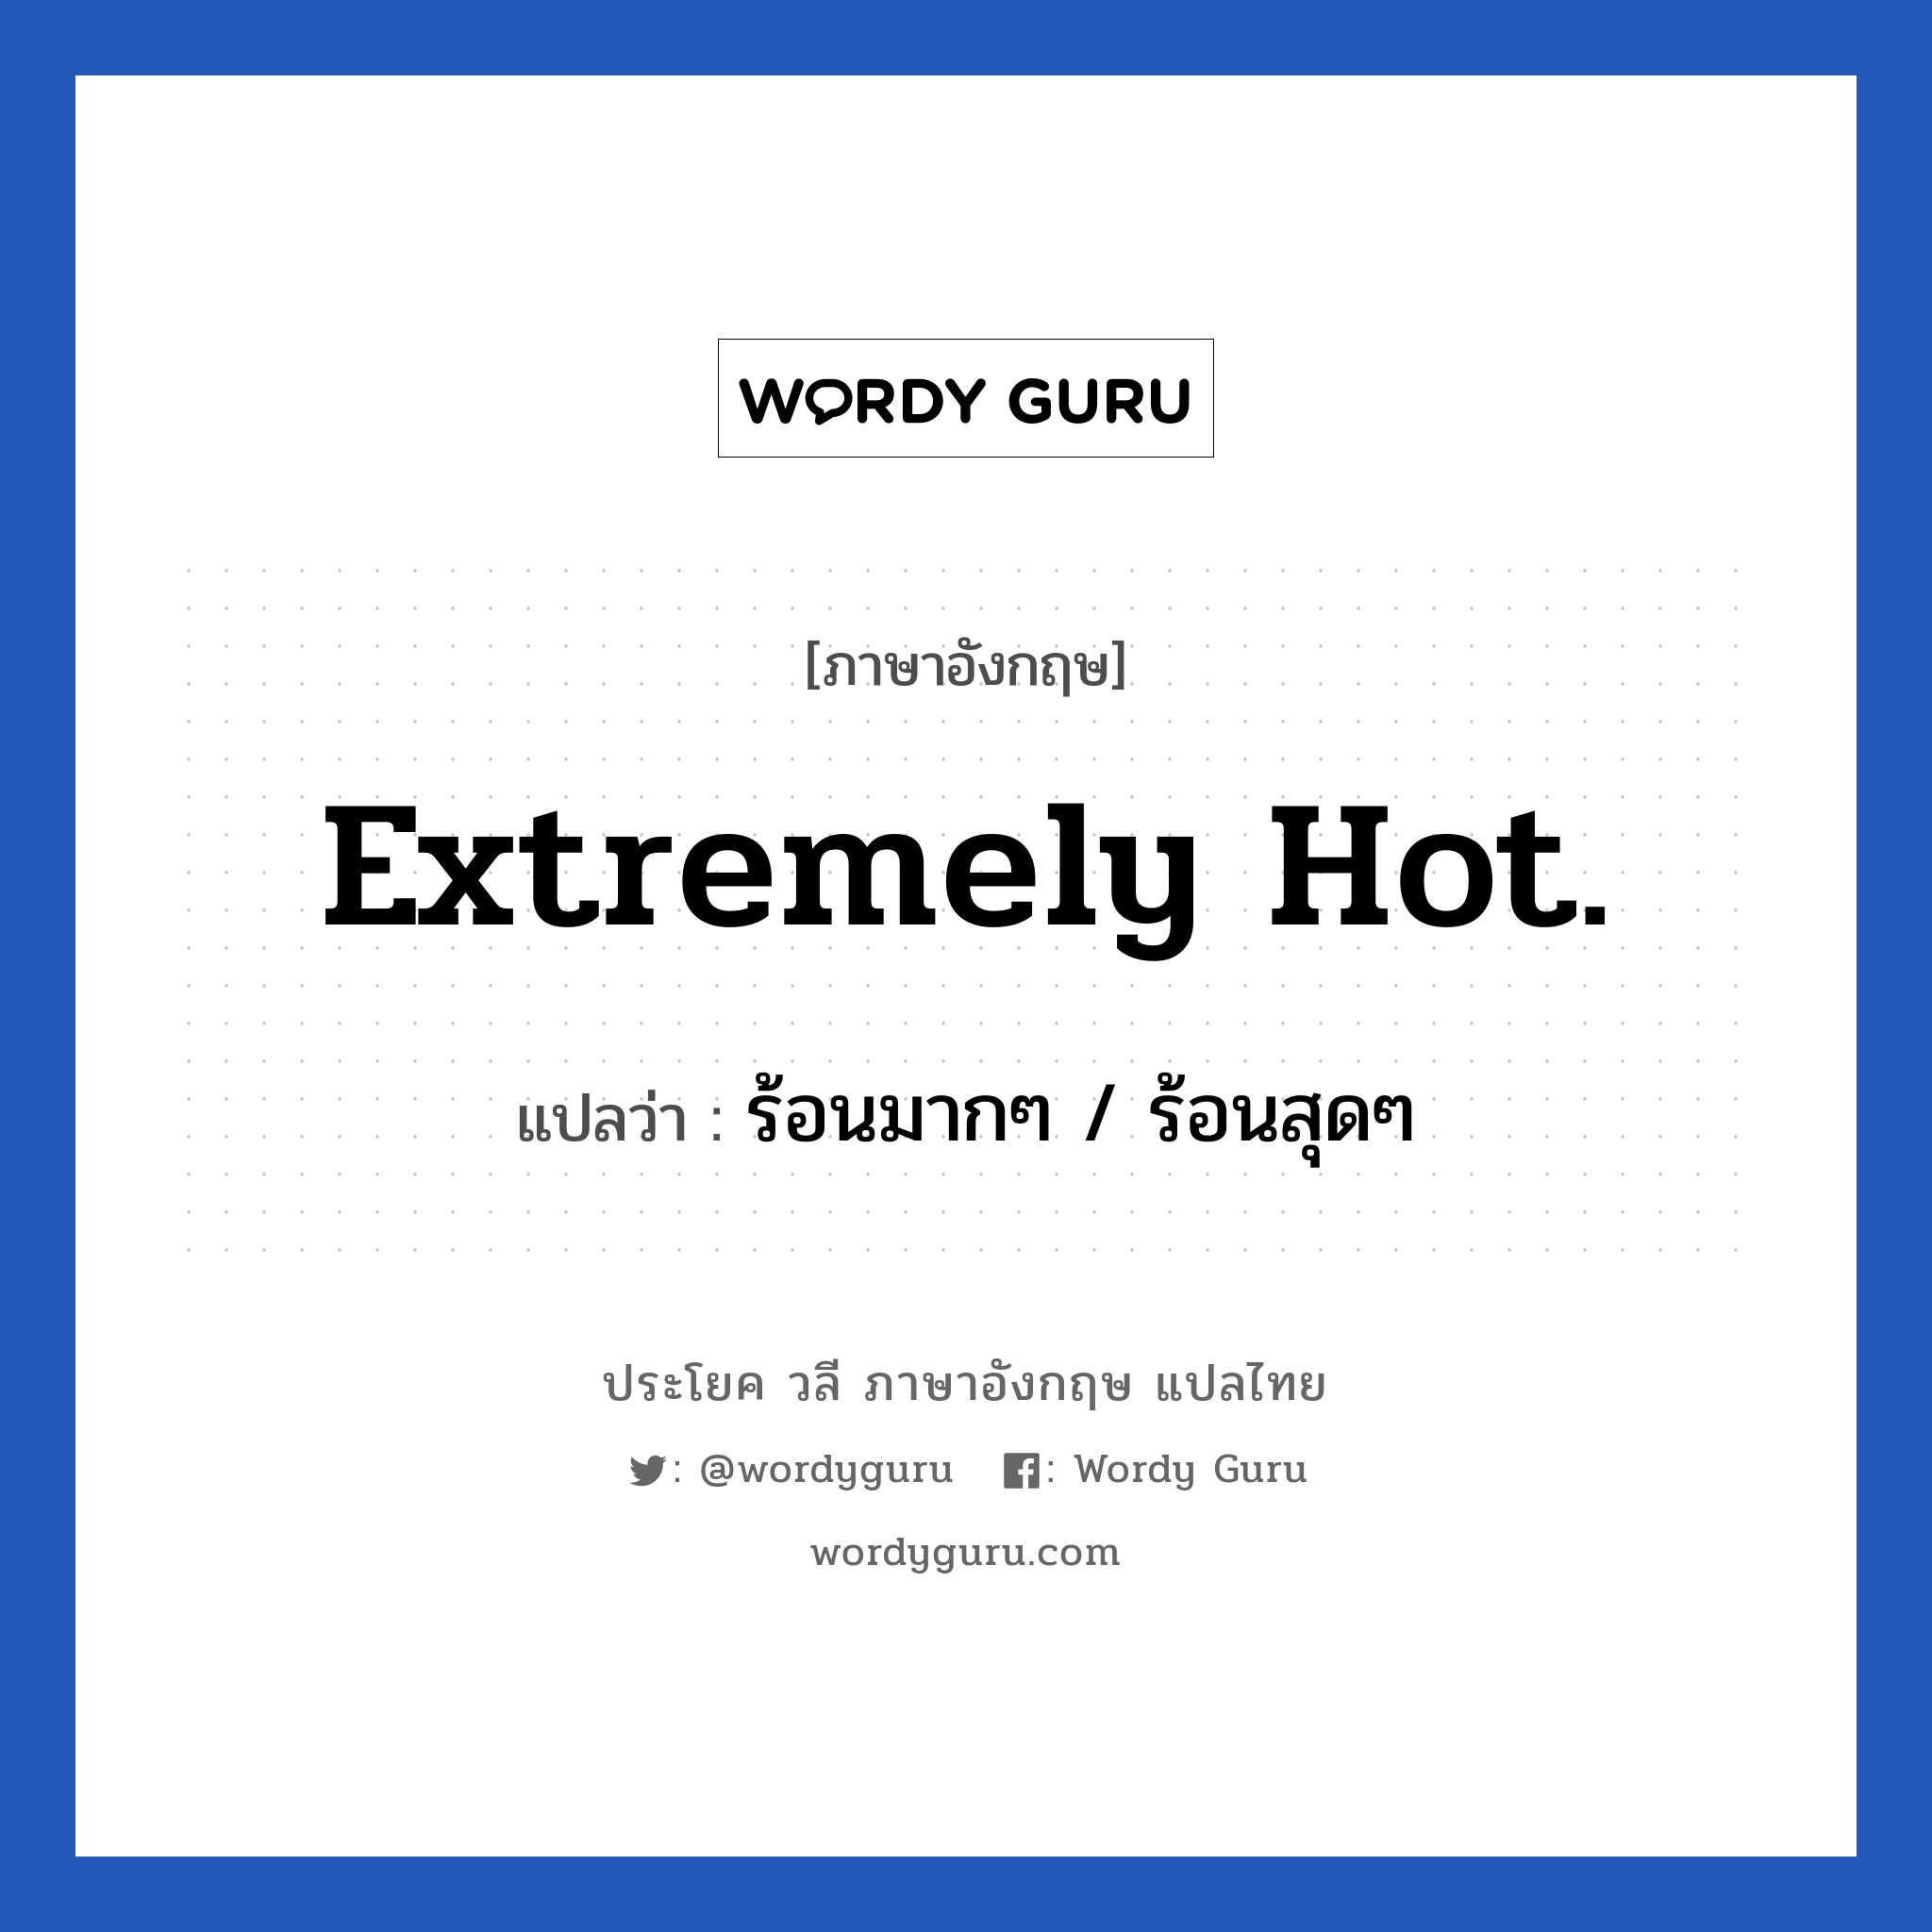 Extremely hot. แปลว่า?, วลีภาษาอังกฤษ Extremely hot. แปลว่า ร้อนมากๆ / ร้อนสุดๆ